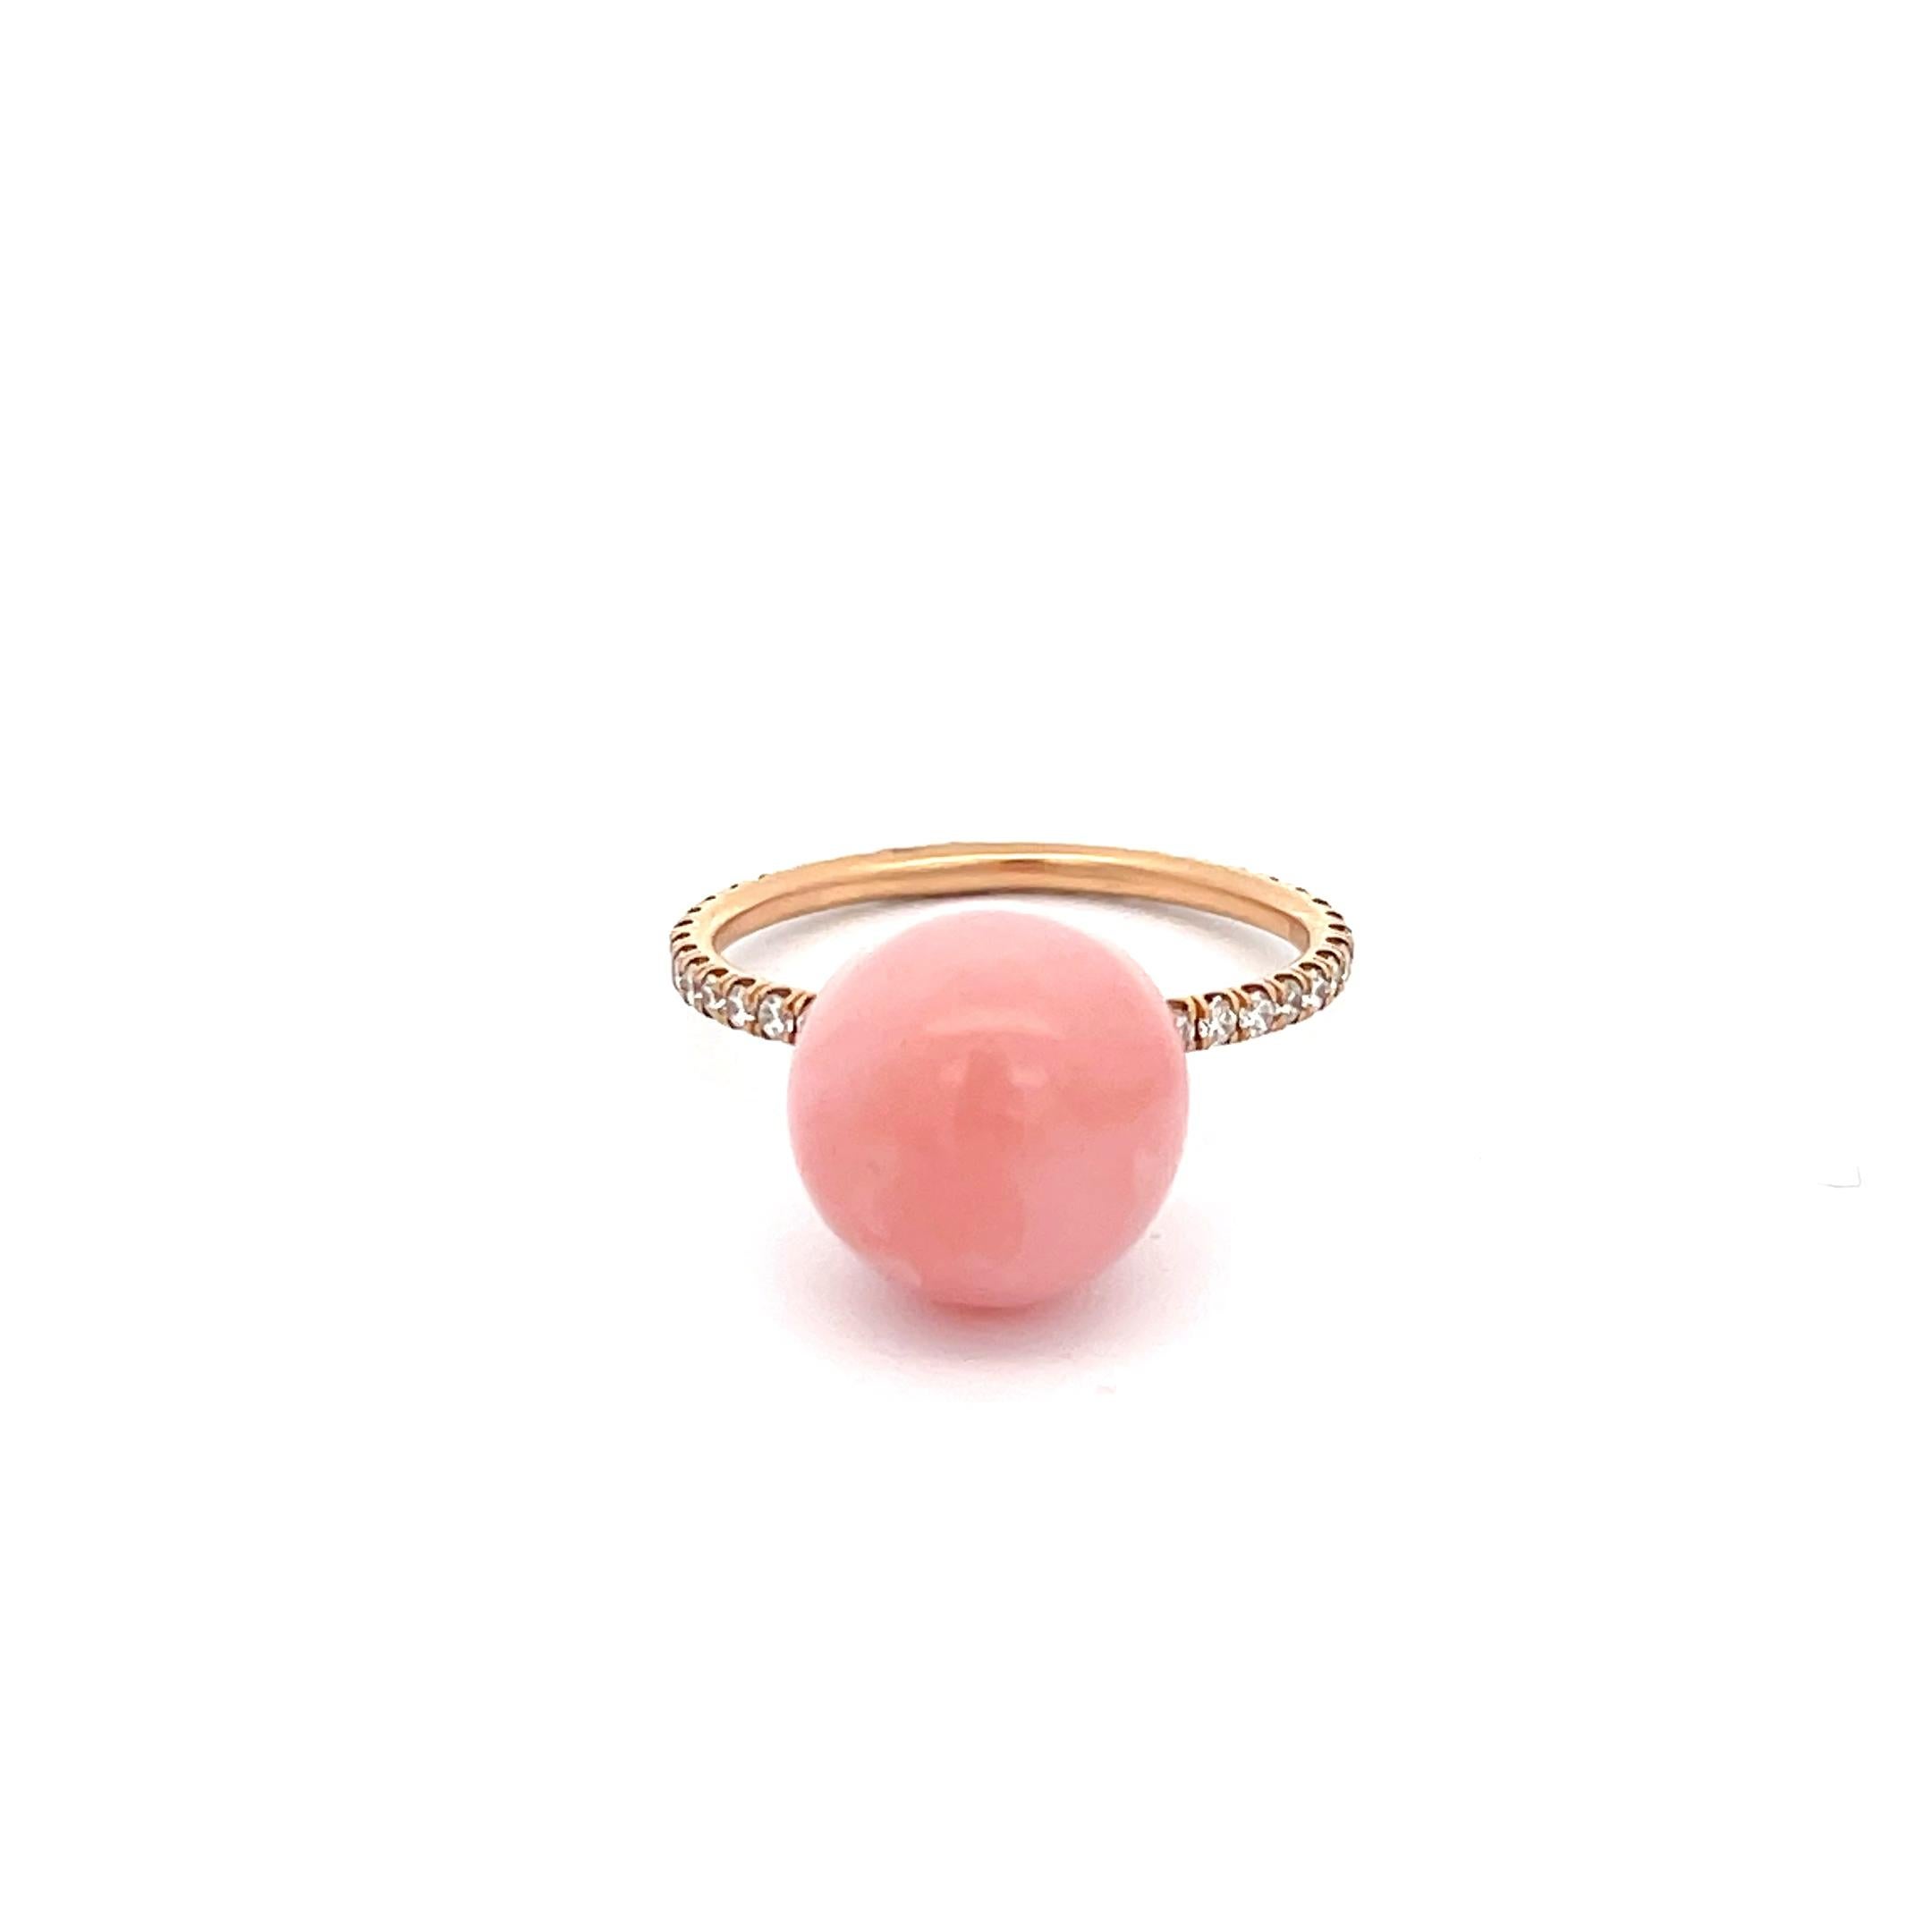 Irene Neuwirth Pink Opal Diamond Ring 18K Rose Gold Size 7